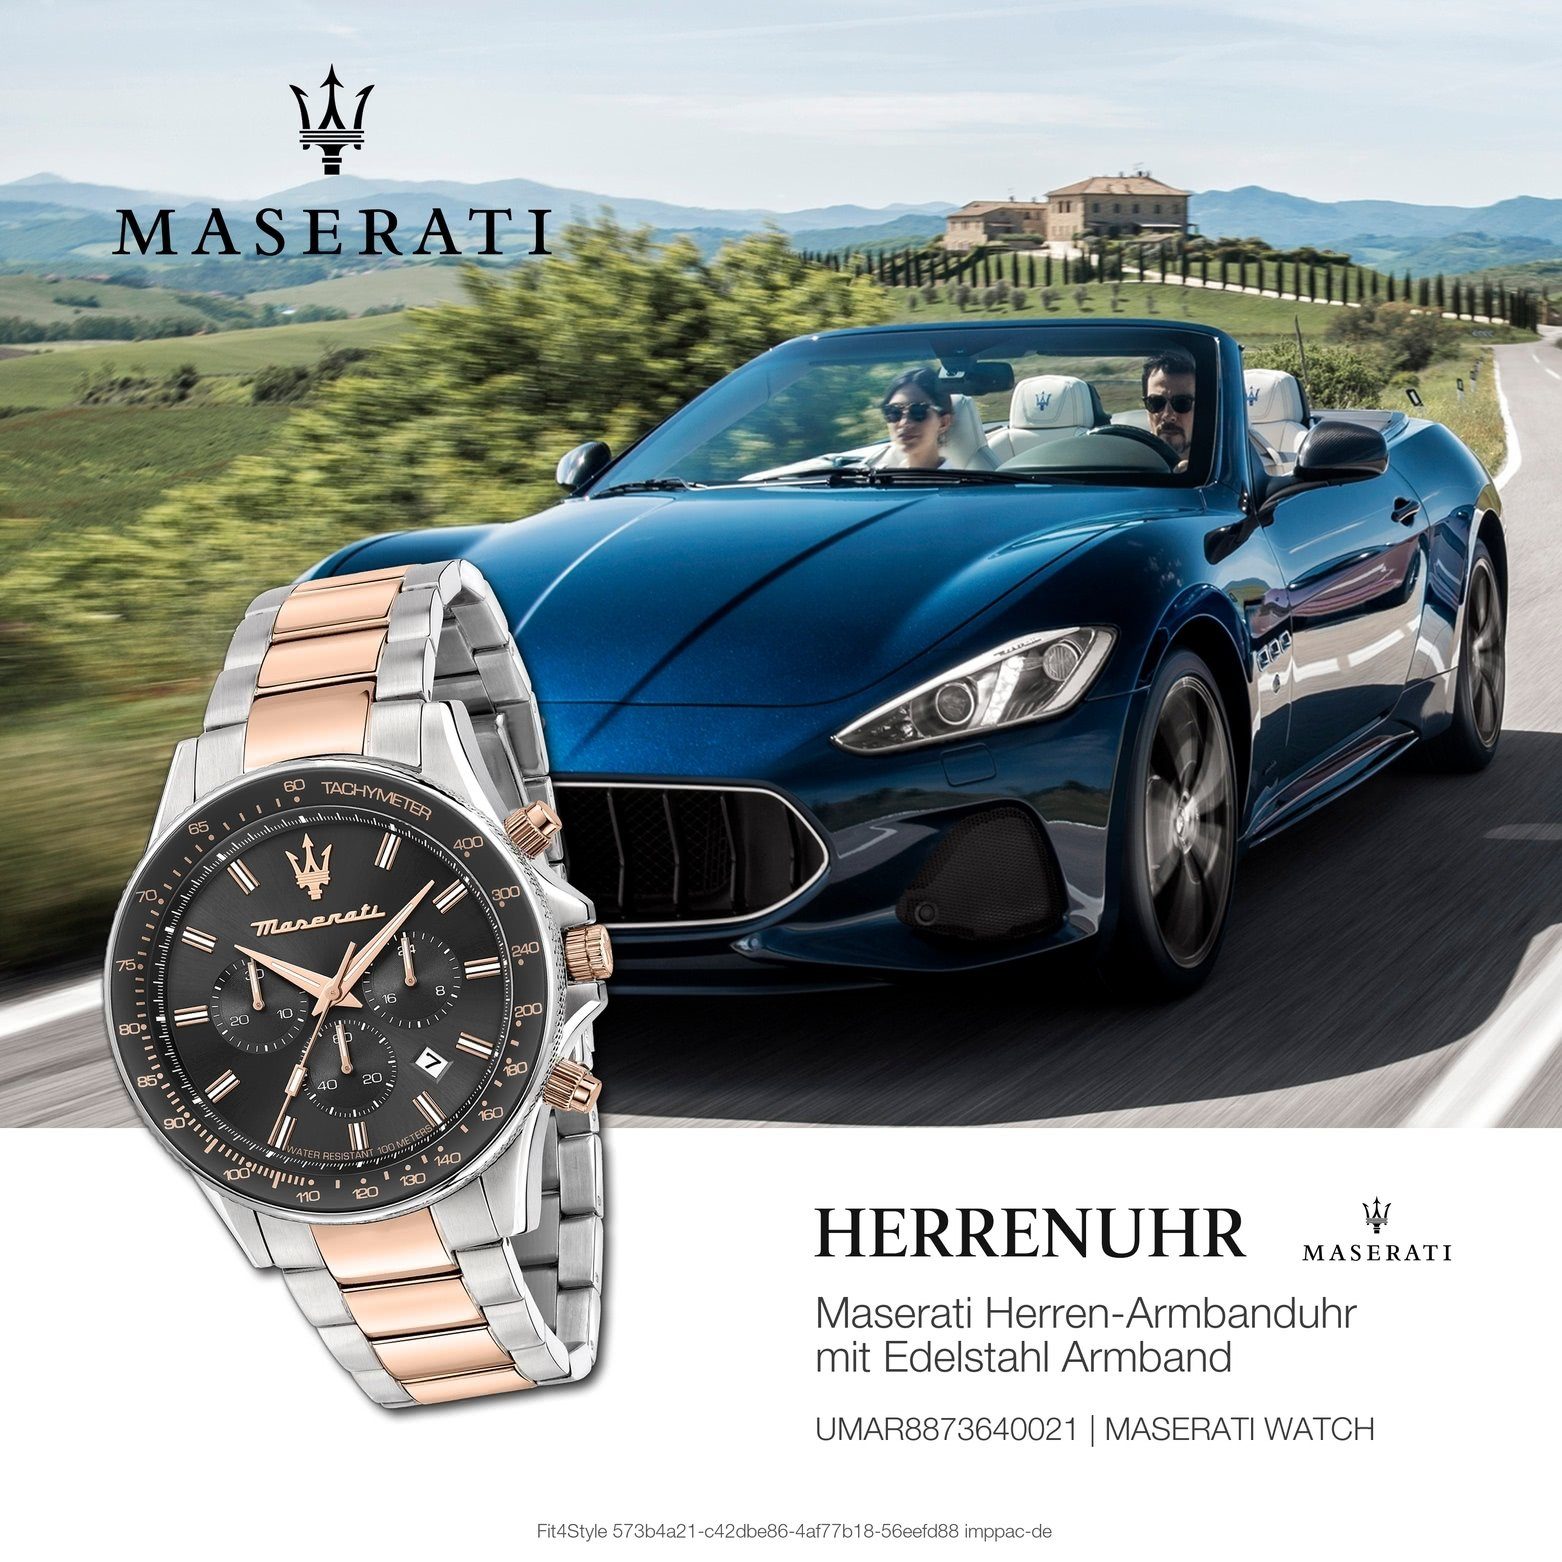 MASERATI Chronograph Maserati Herrenuhr Sfida Herrenuhr Made-In (ca. 44mm) Italy groß Chrono, schwarz rund, bicolor, Edelstahlarmband